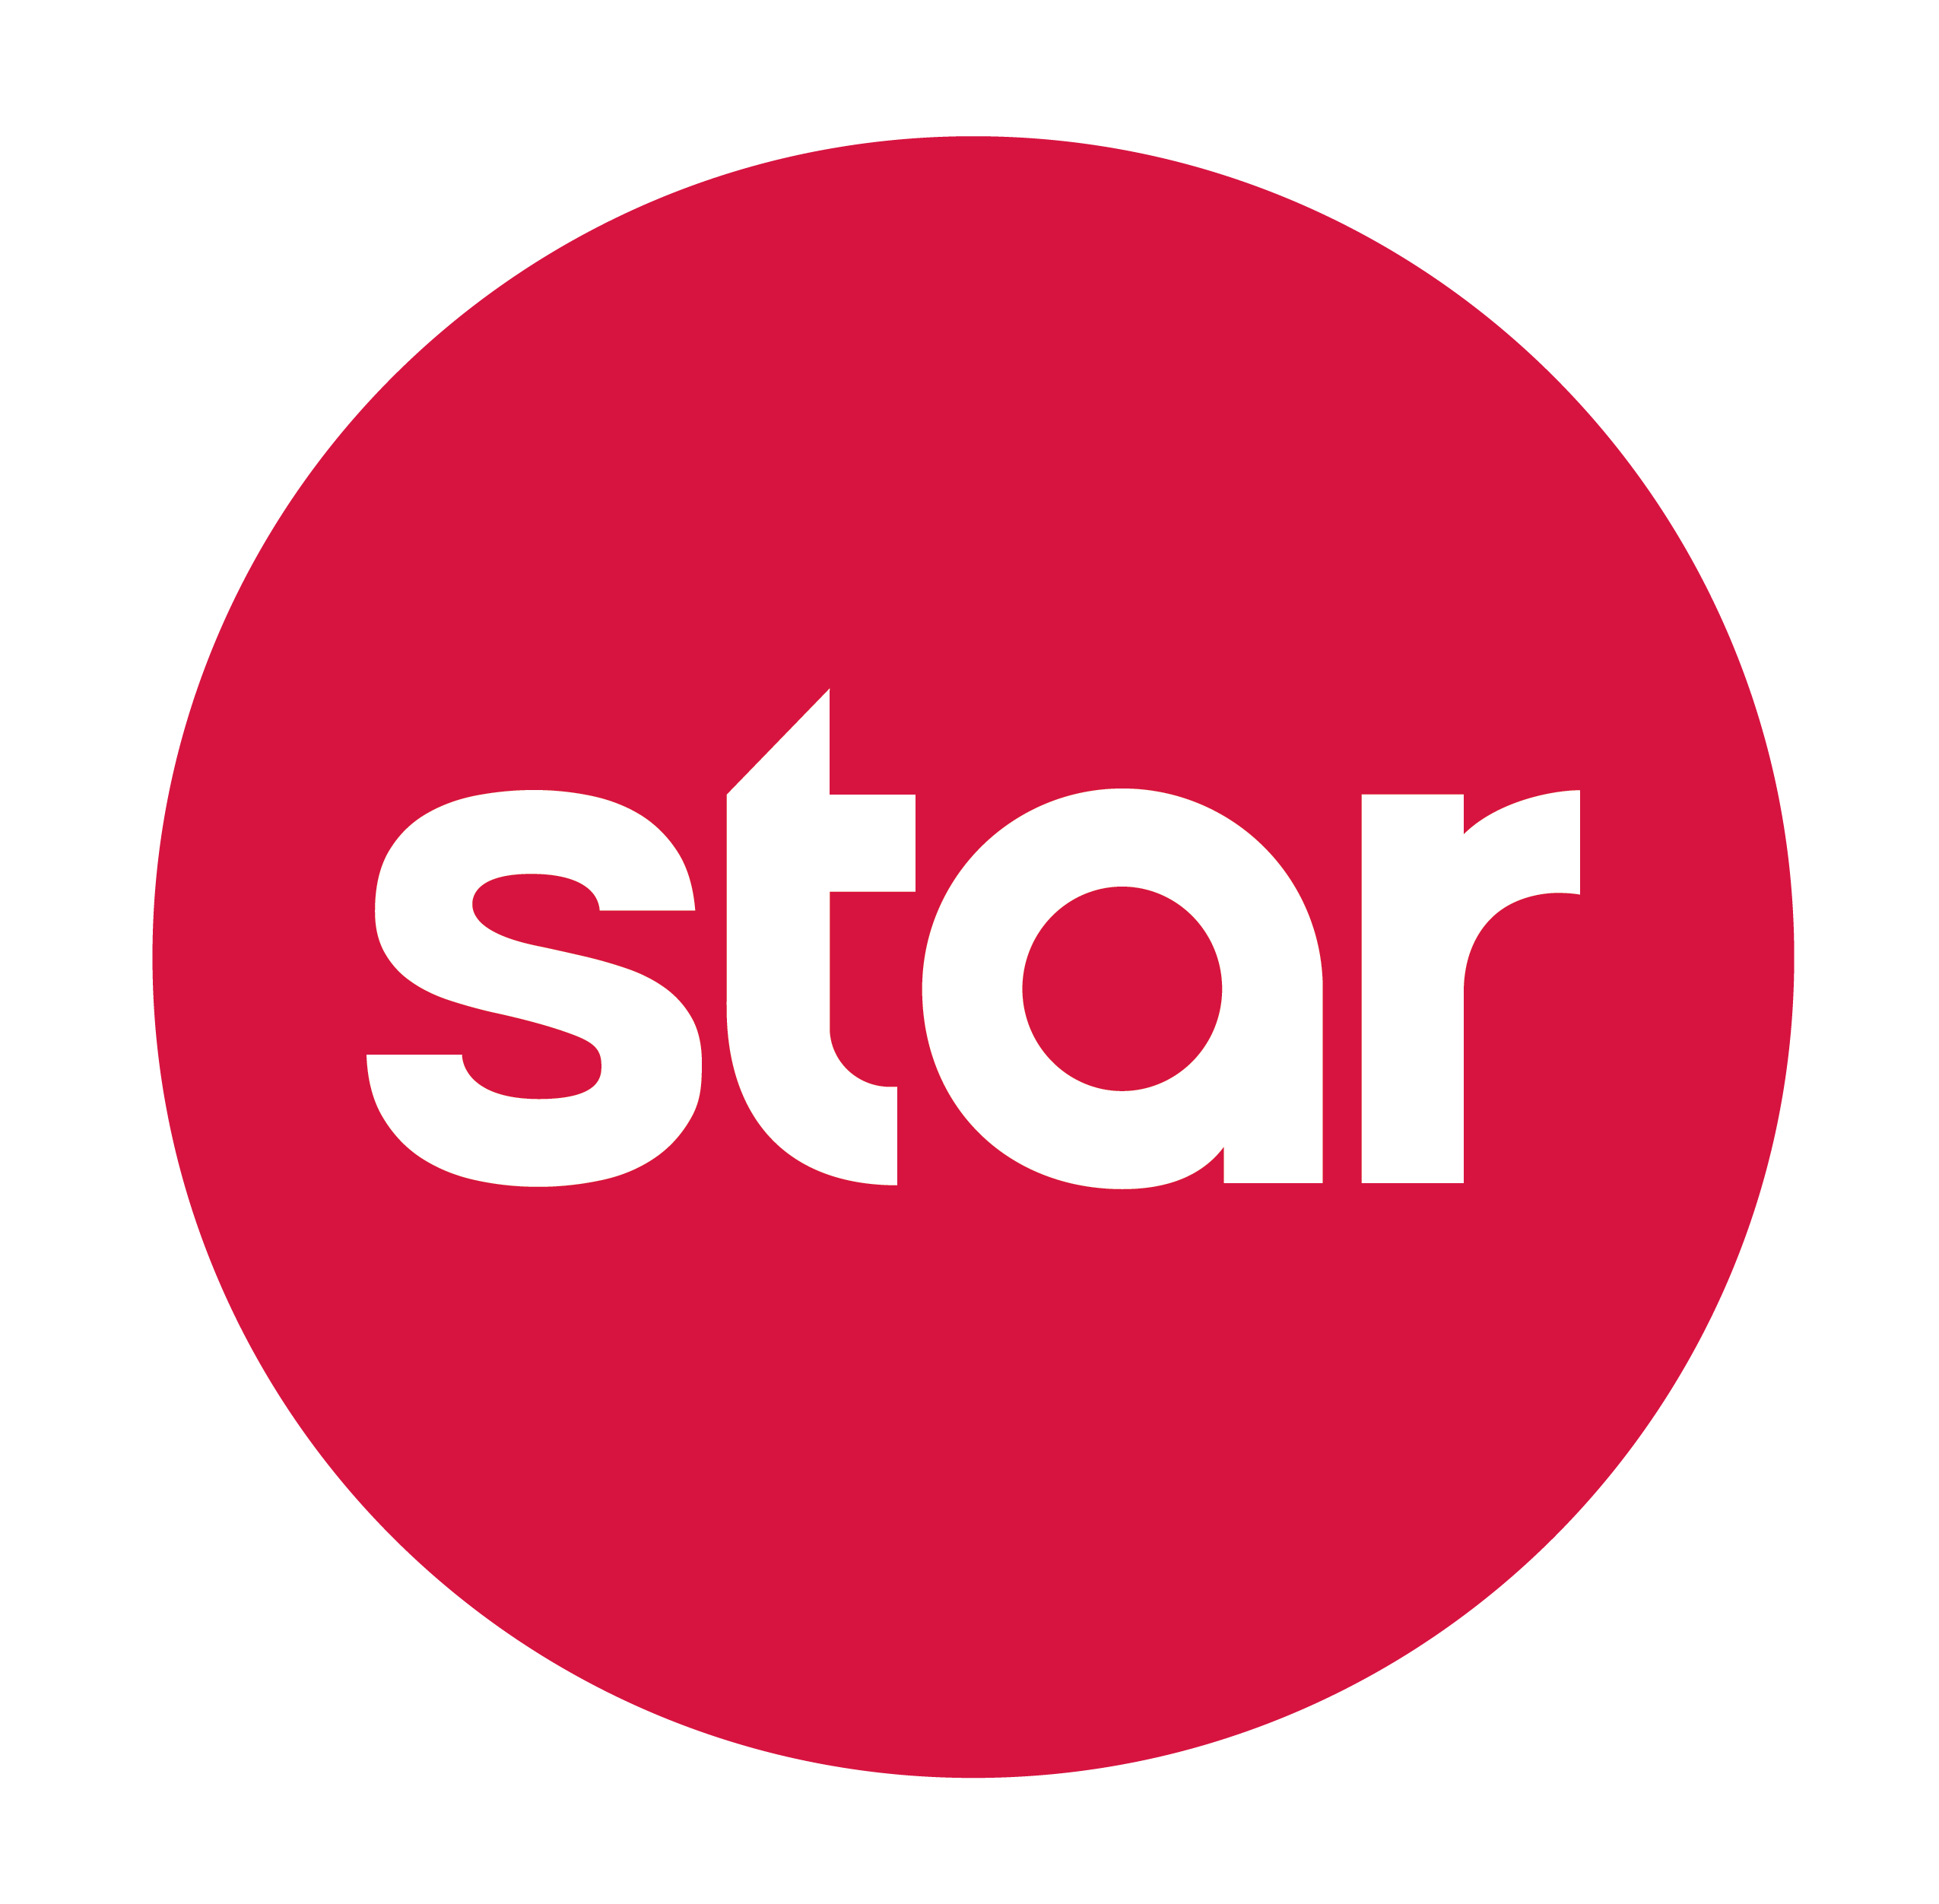 Team symbol of STAR TV